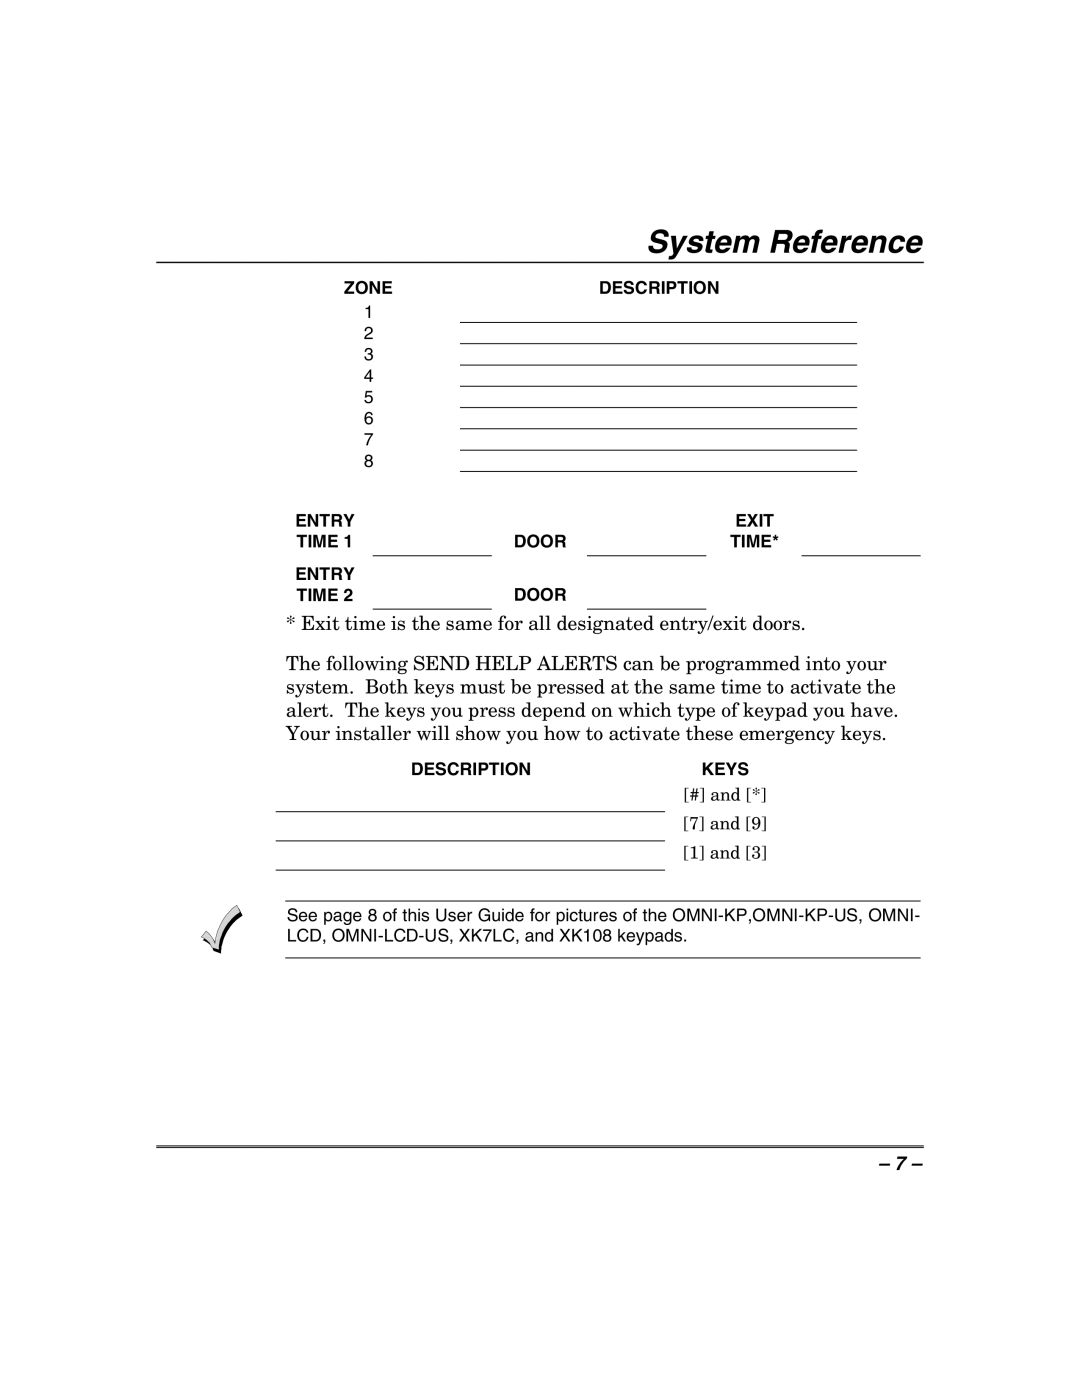 Honeywell 408EU manual System Reference, Descriptionkeys 